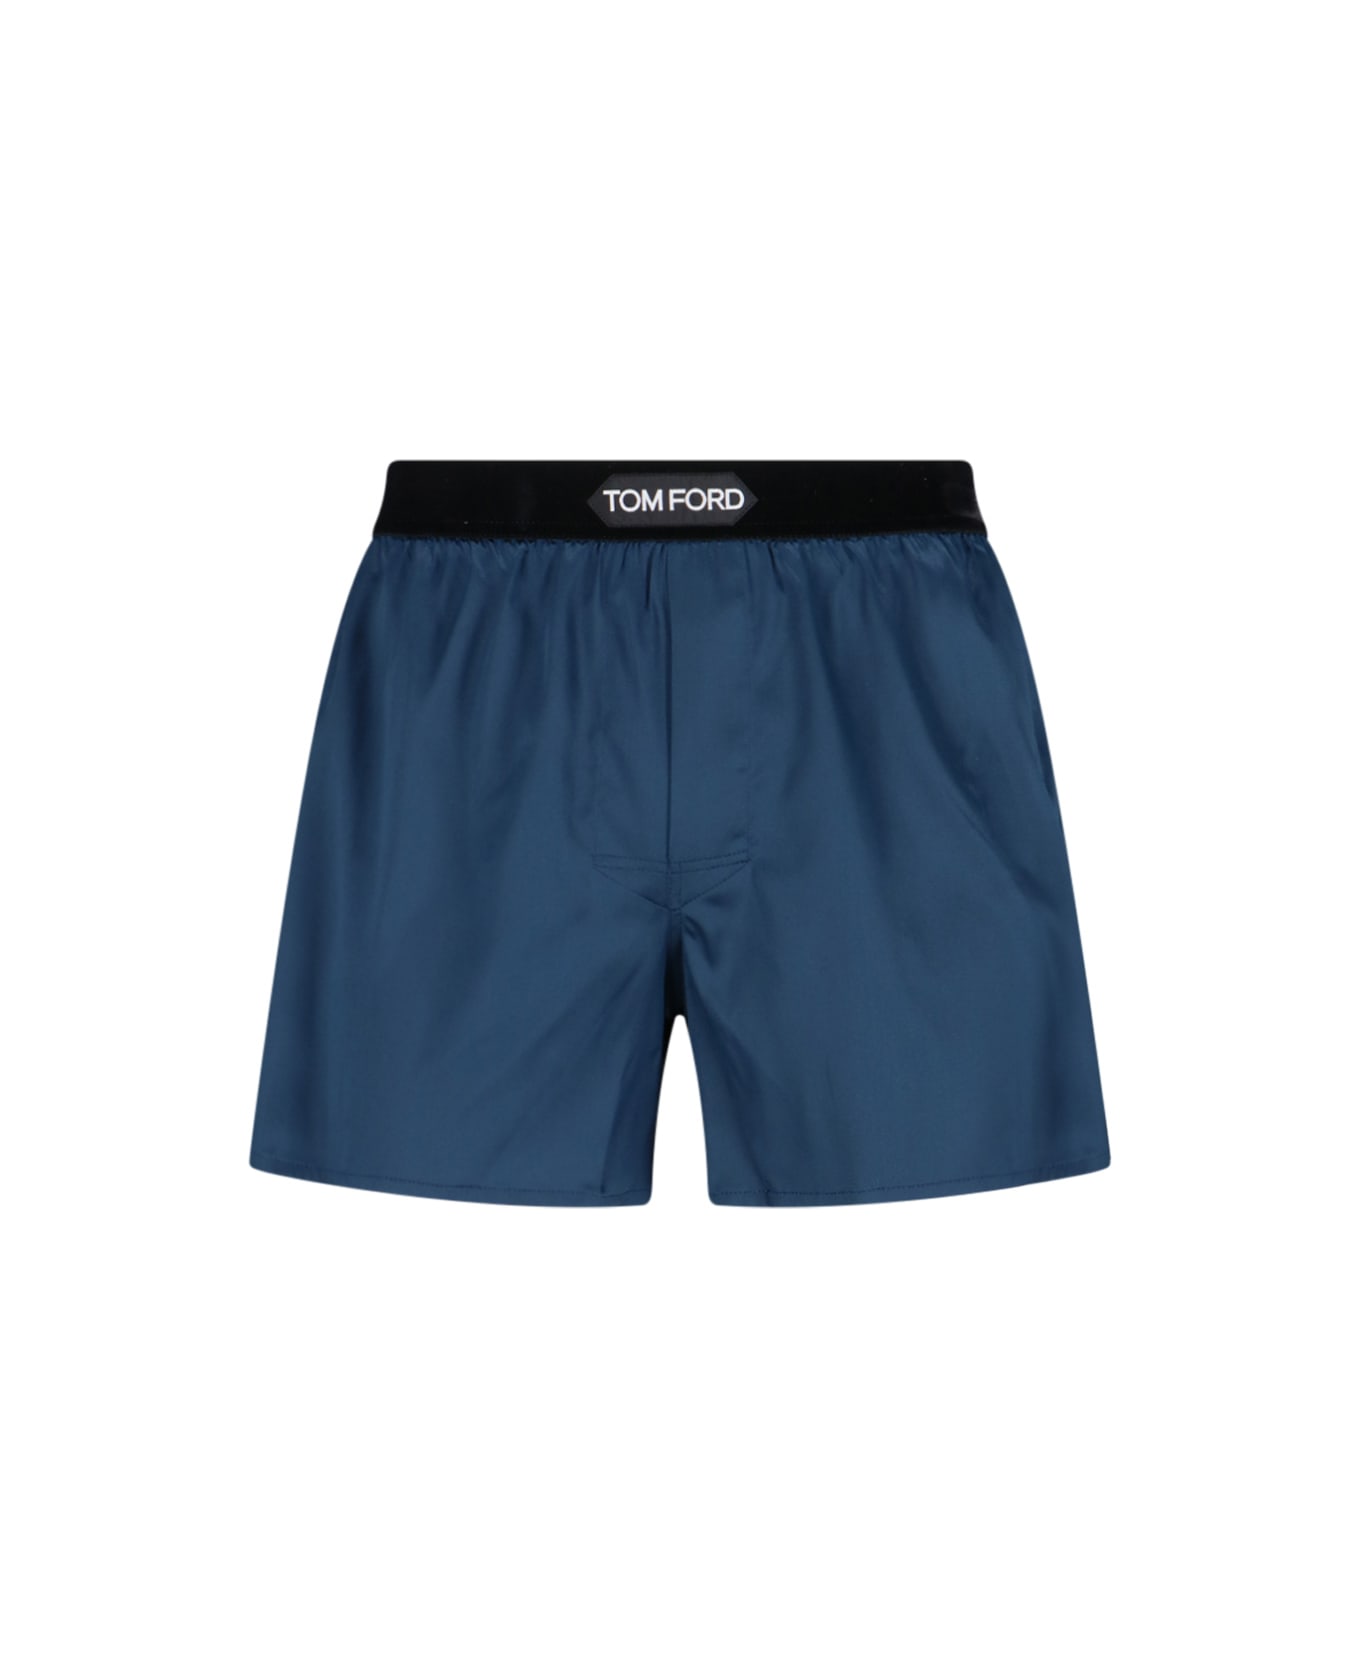 Tom Ford Logo Boxer Shorts - Blue